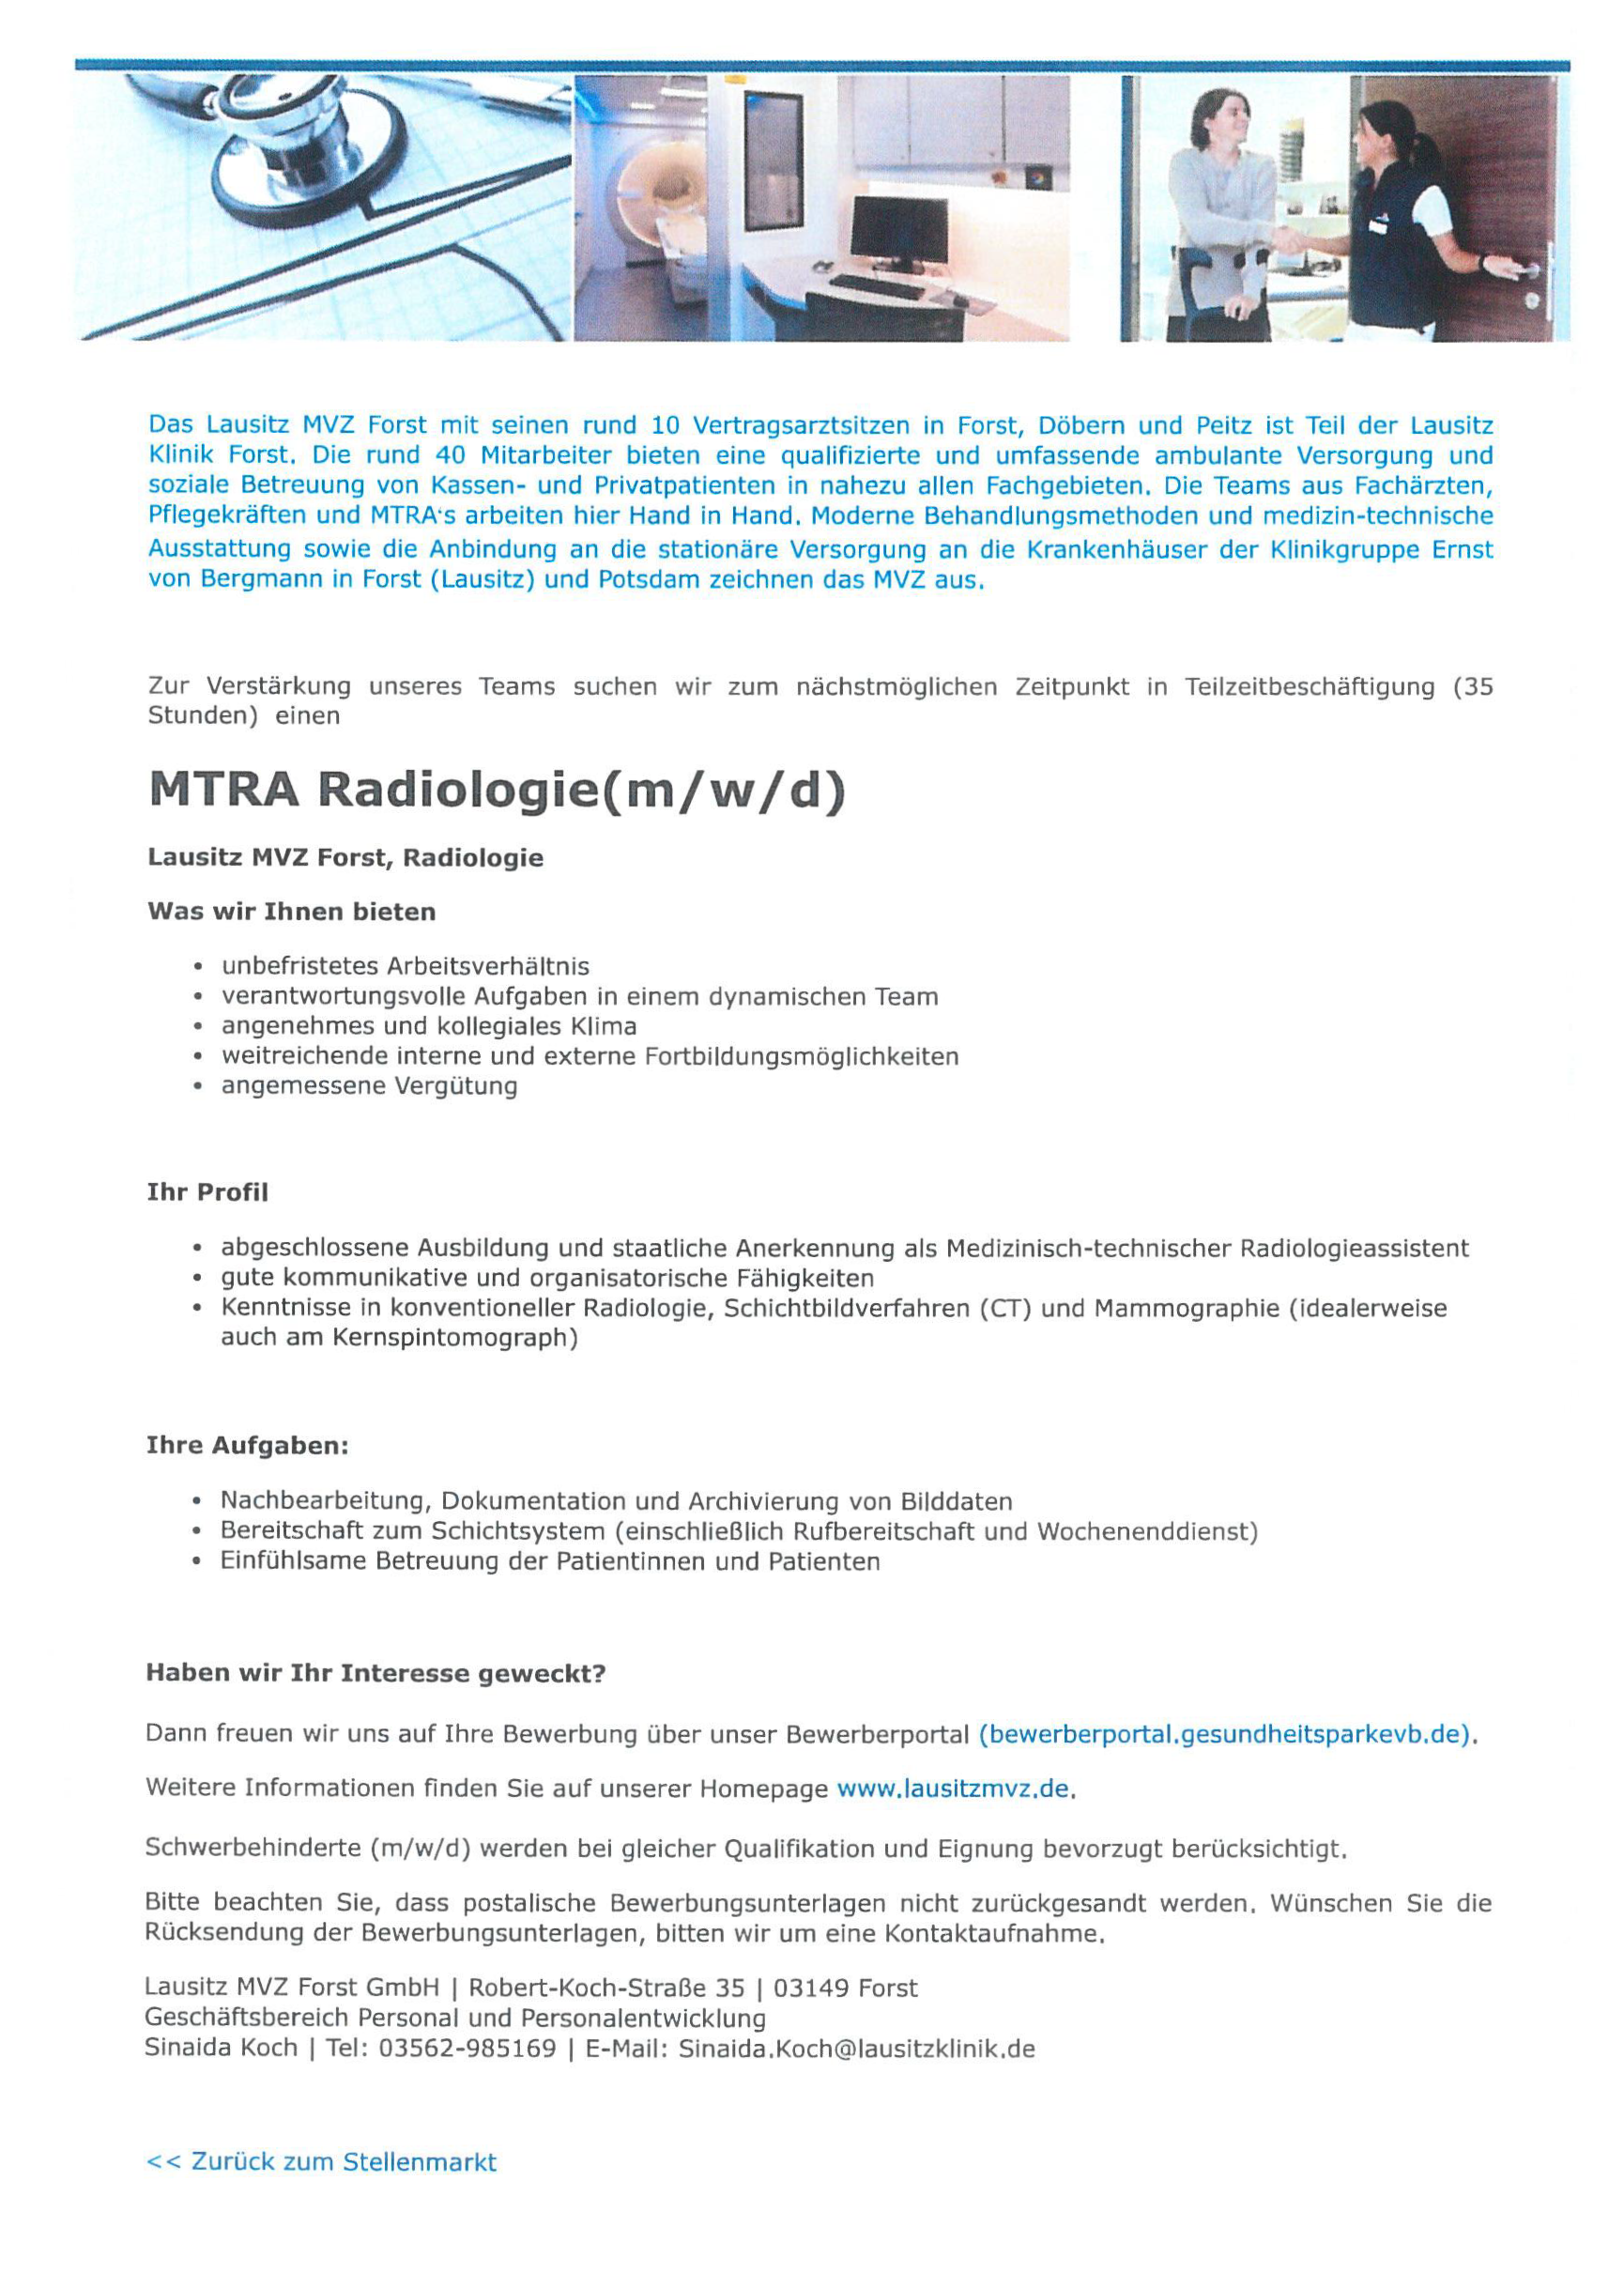 Lausitz Klinik Forst GmbH MTRA Radiologie (m/w/d)